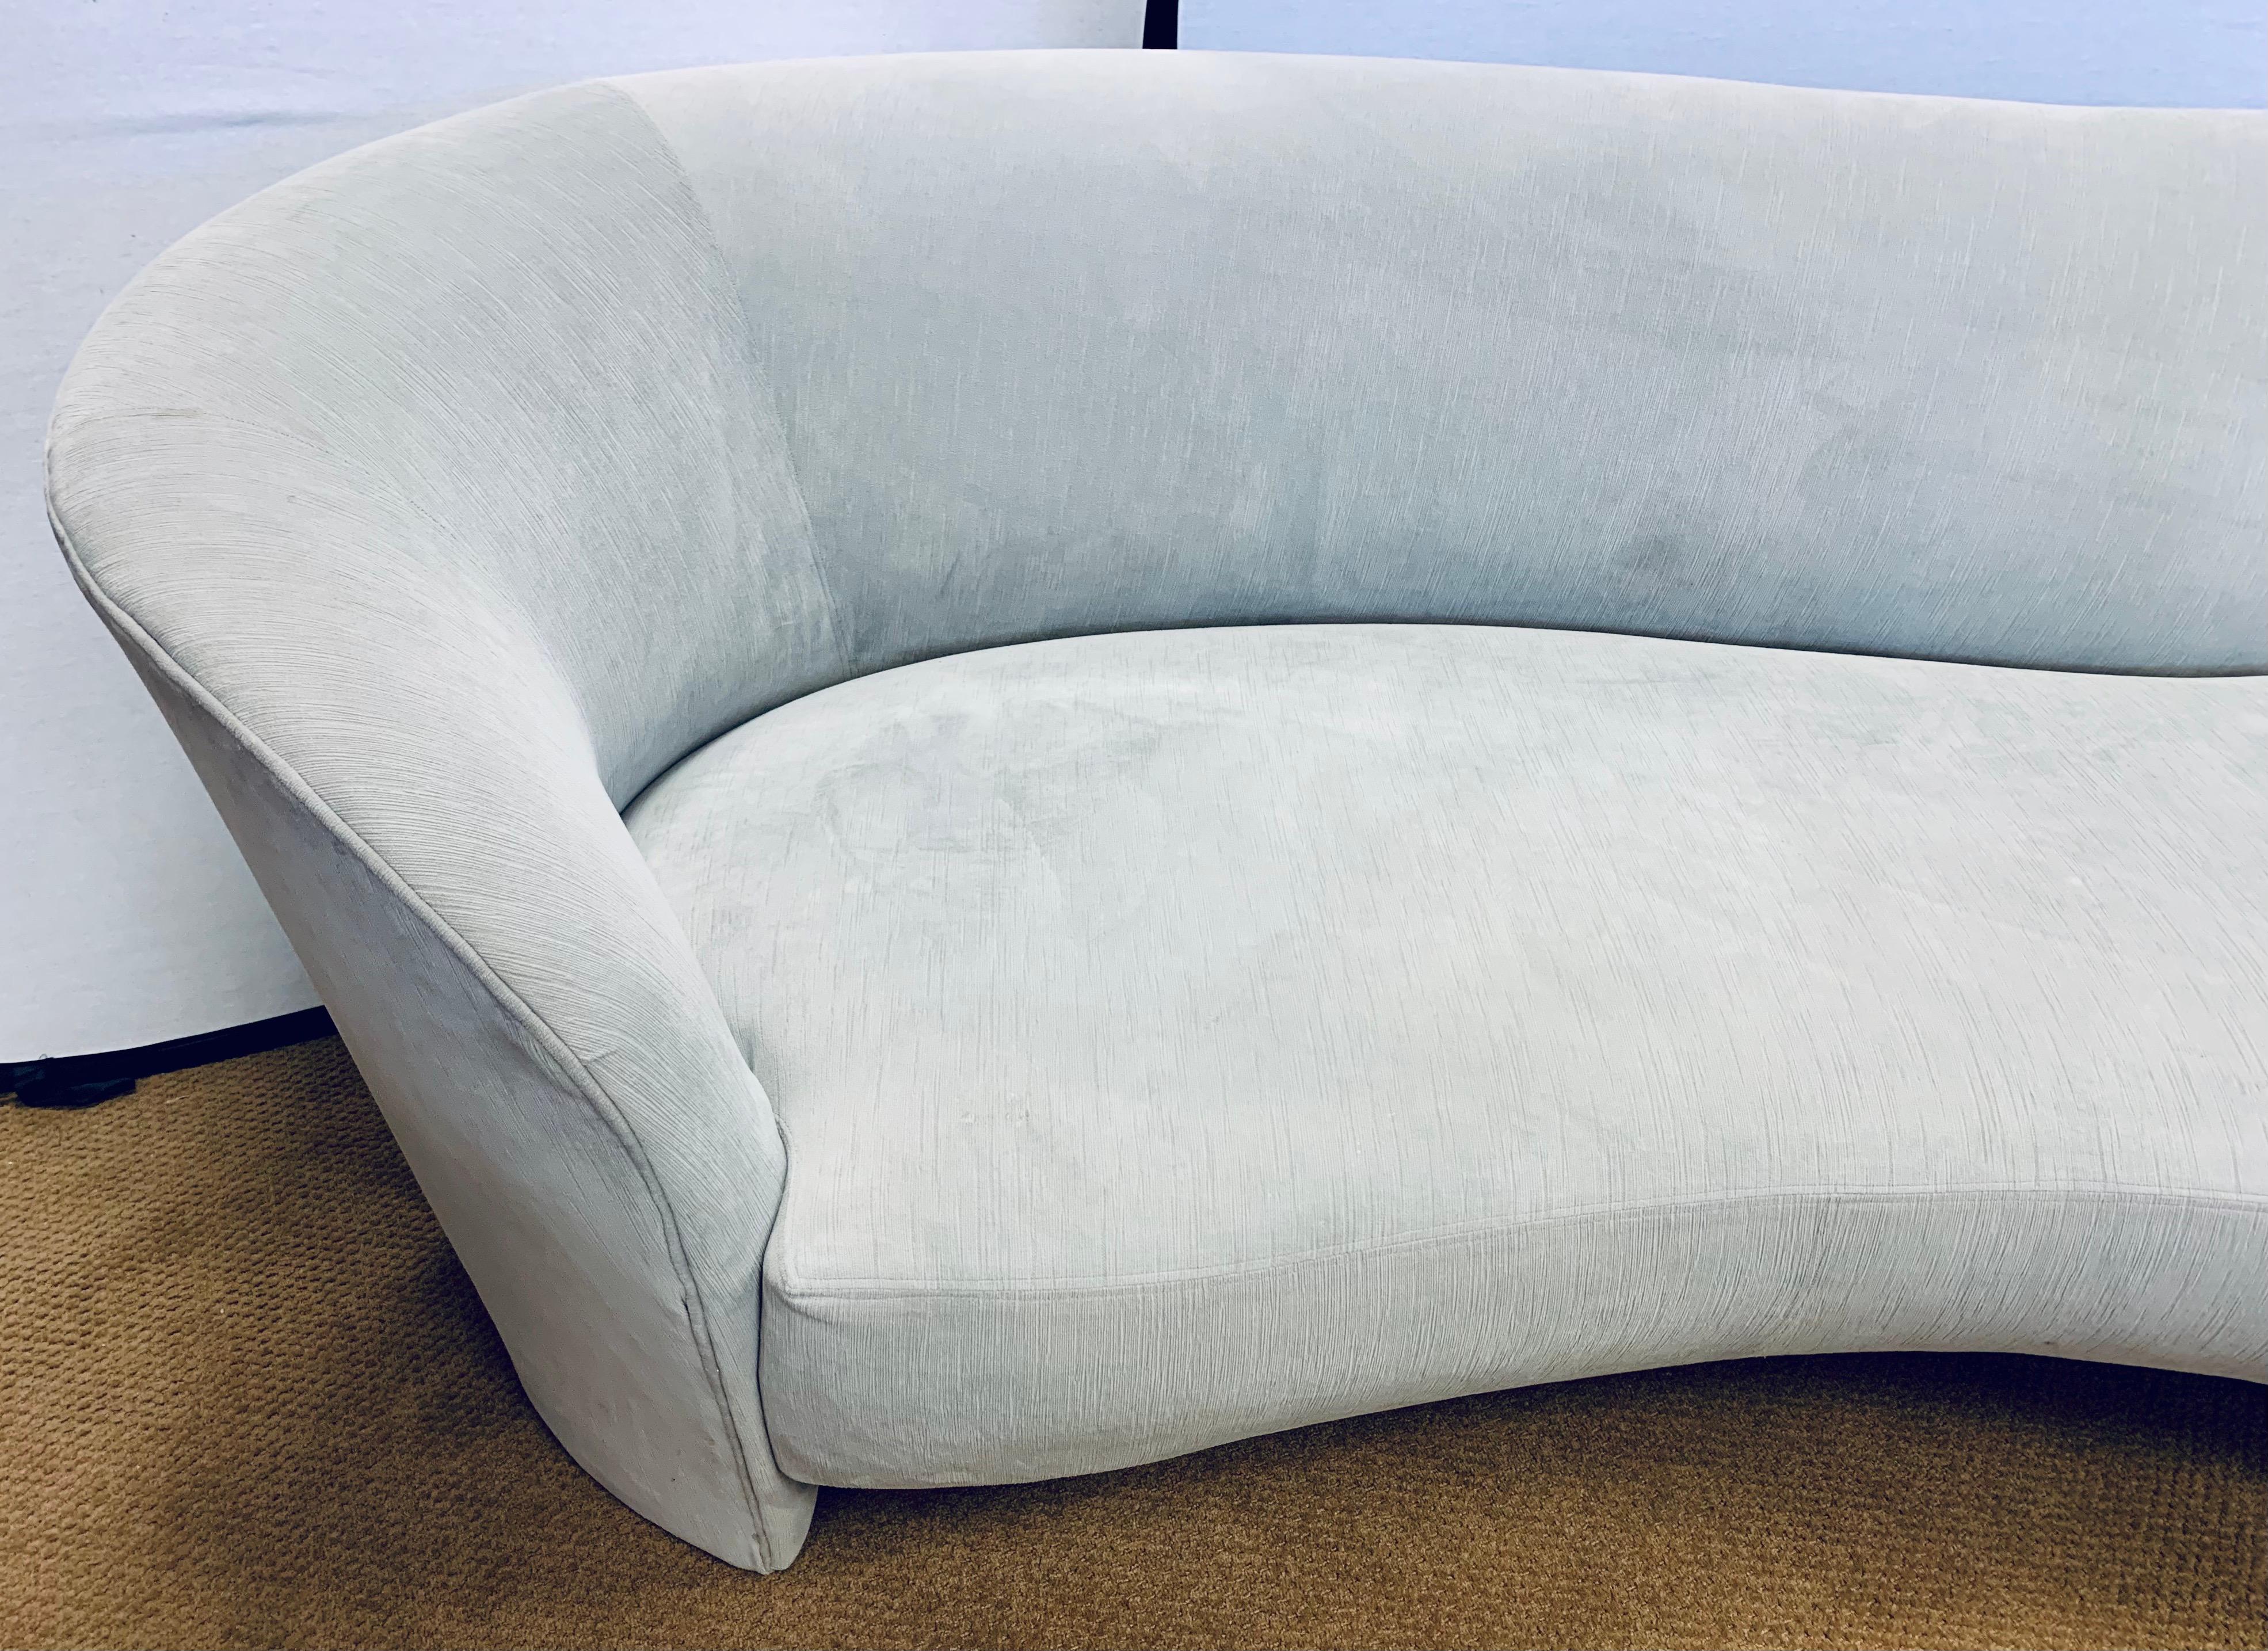 American Mid-Century Modern Sculptural Serpentine Cloud Sofa for Directional Furniture